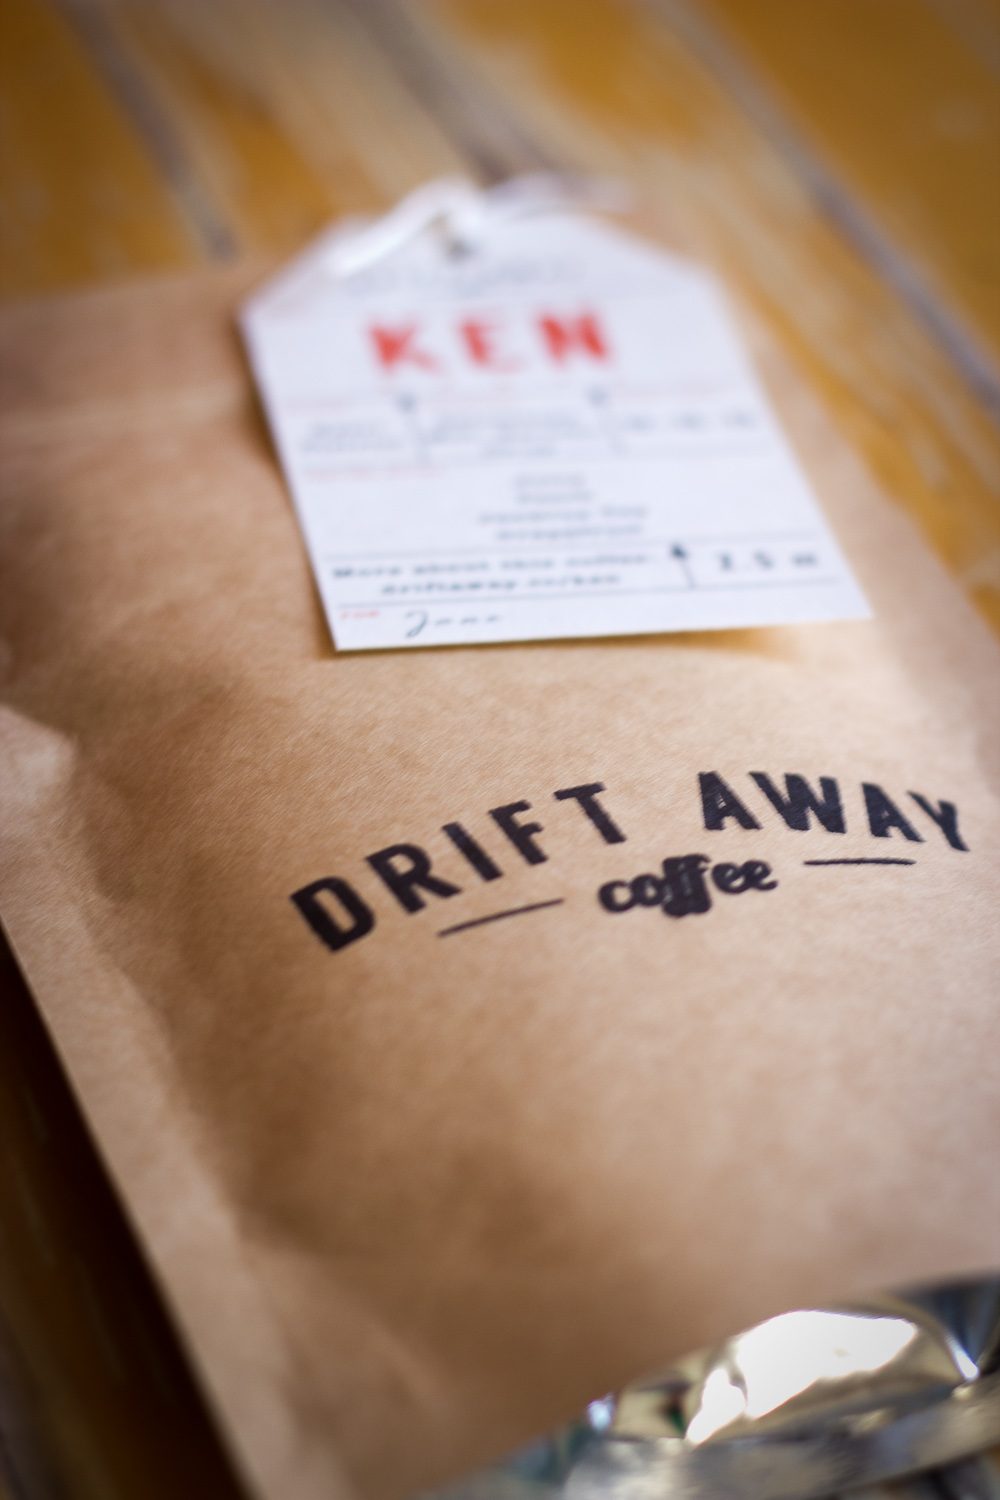 https://driftaway.coffee/wp-content/uploads/2014/08/CoffeePackaging-1-5.jpg